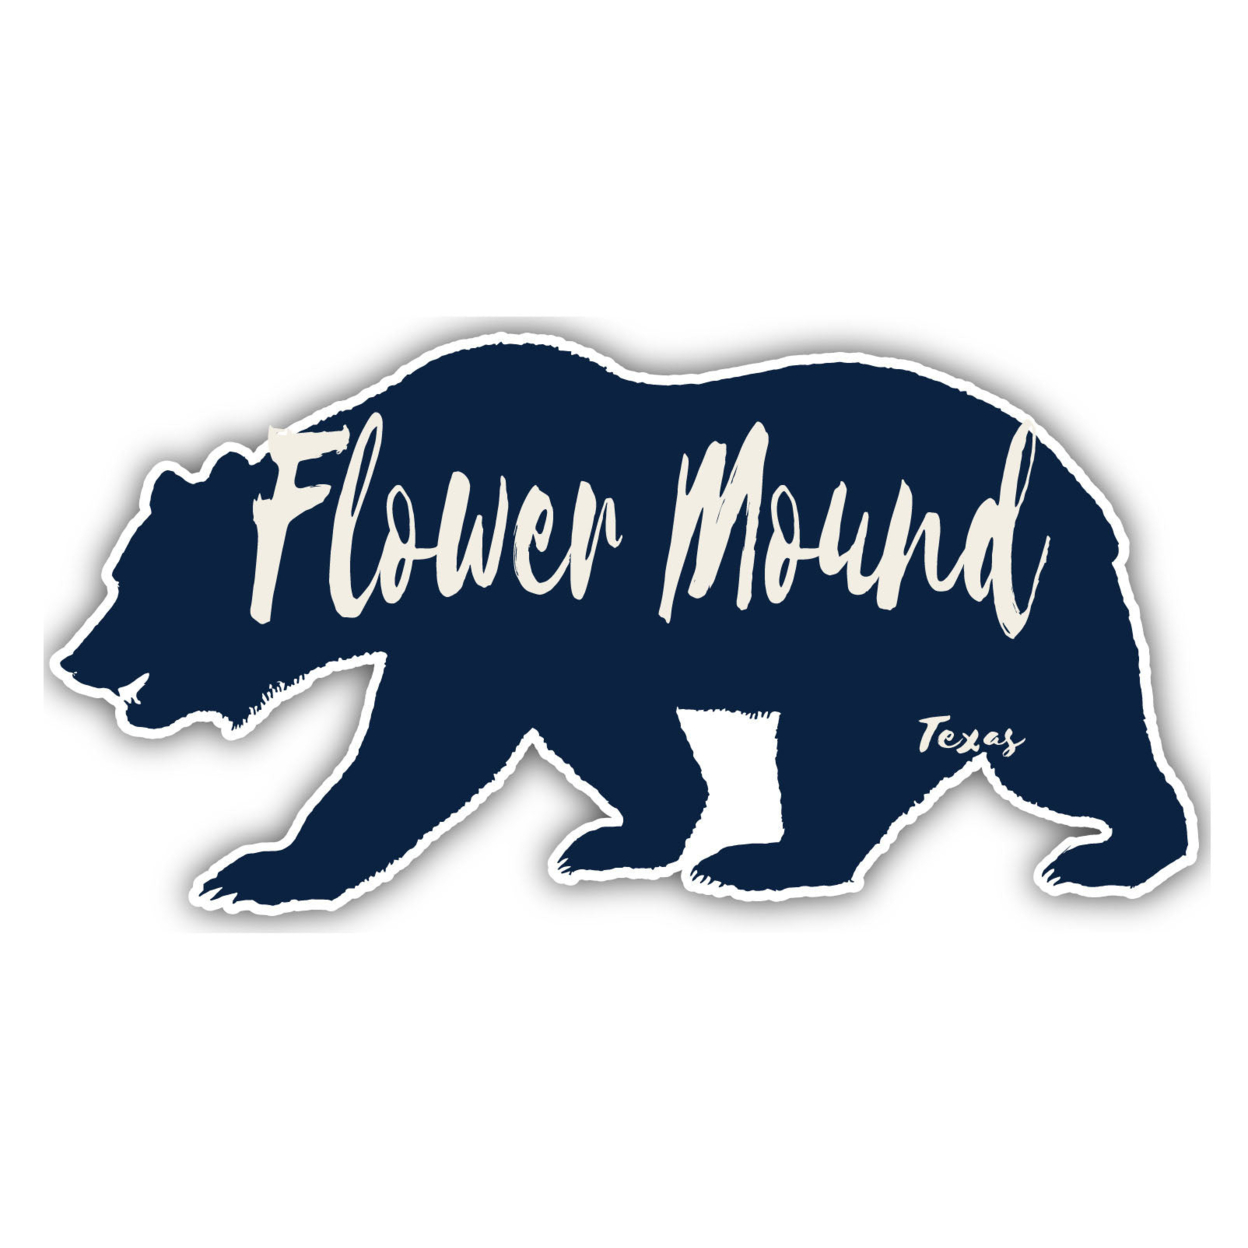 Flower Mound Texas Souvenir Decorative Stickers (Choose Theme And Size) - Single Unit, 2-Inch, Bear